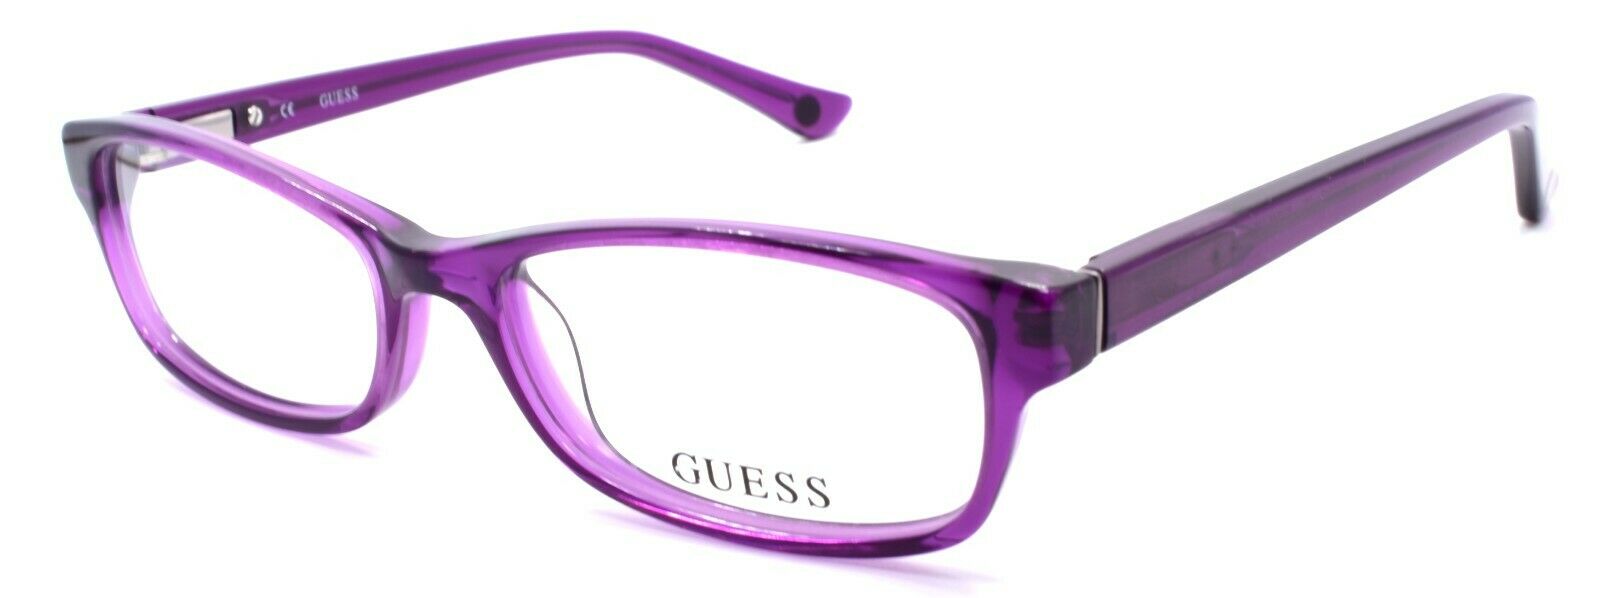 1-GUESS GU2517 081 Women's Eyeglasses Frames Petite 50-15-135 Violet-664689713899-IKSpecs